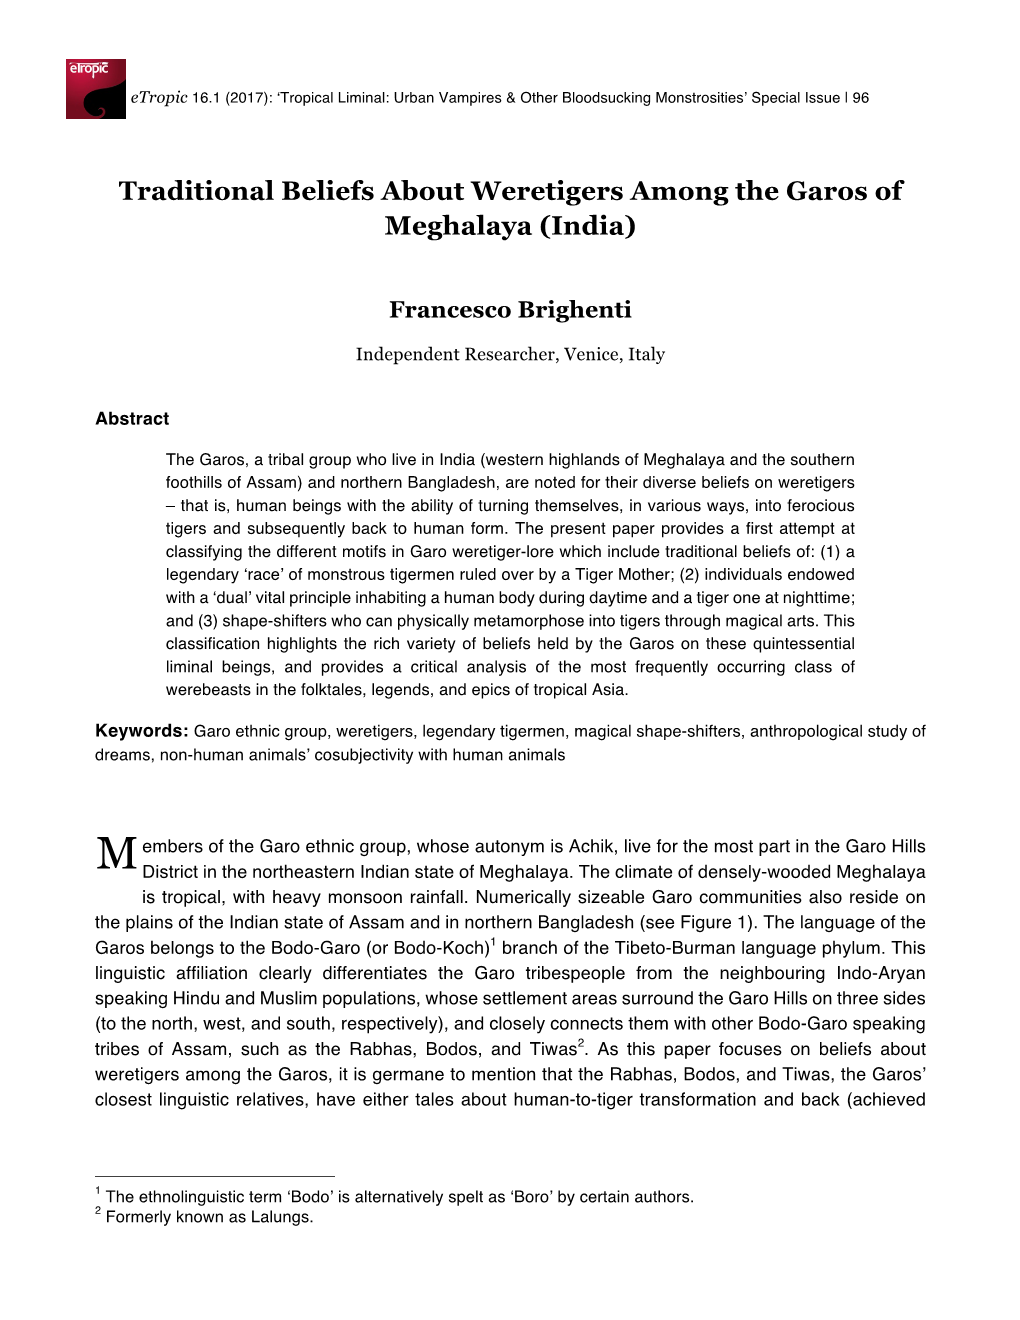 Traditional Beliefs About Weretigers Among the Garos of Meghalaya (India)